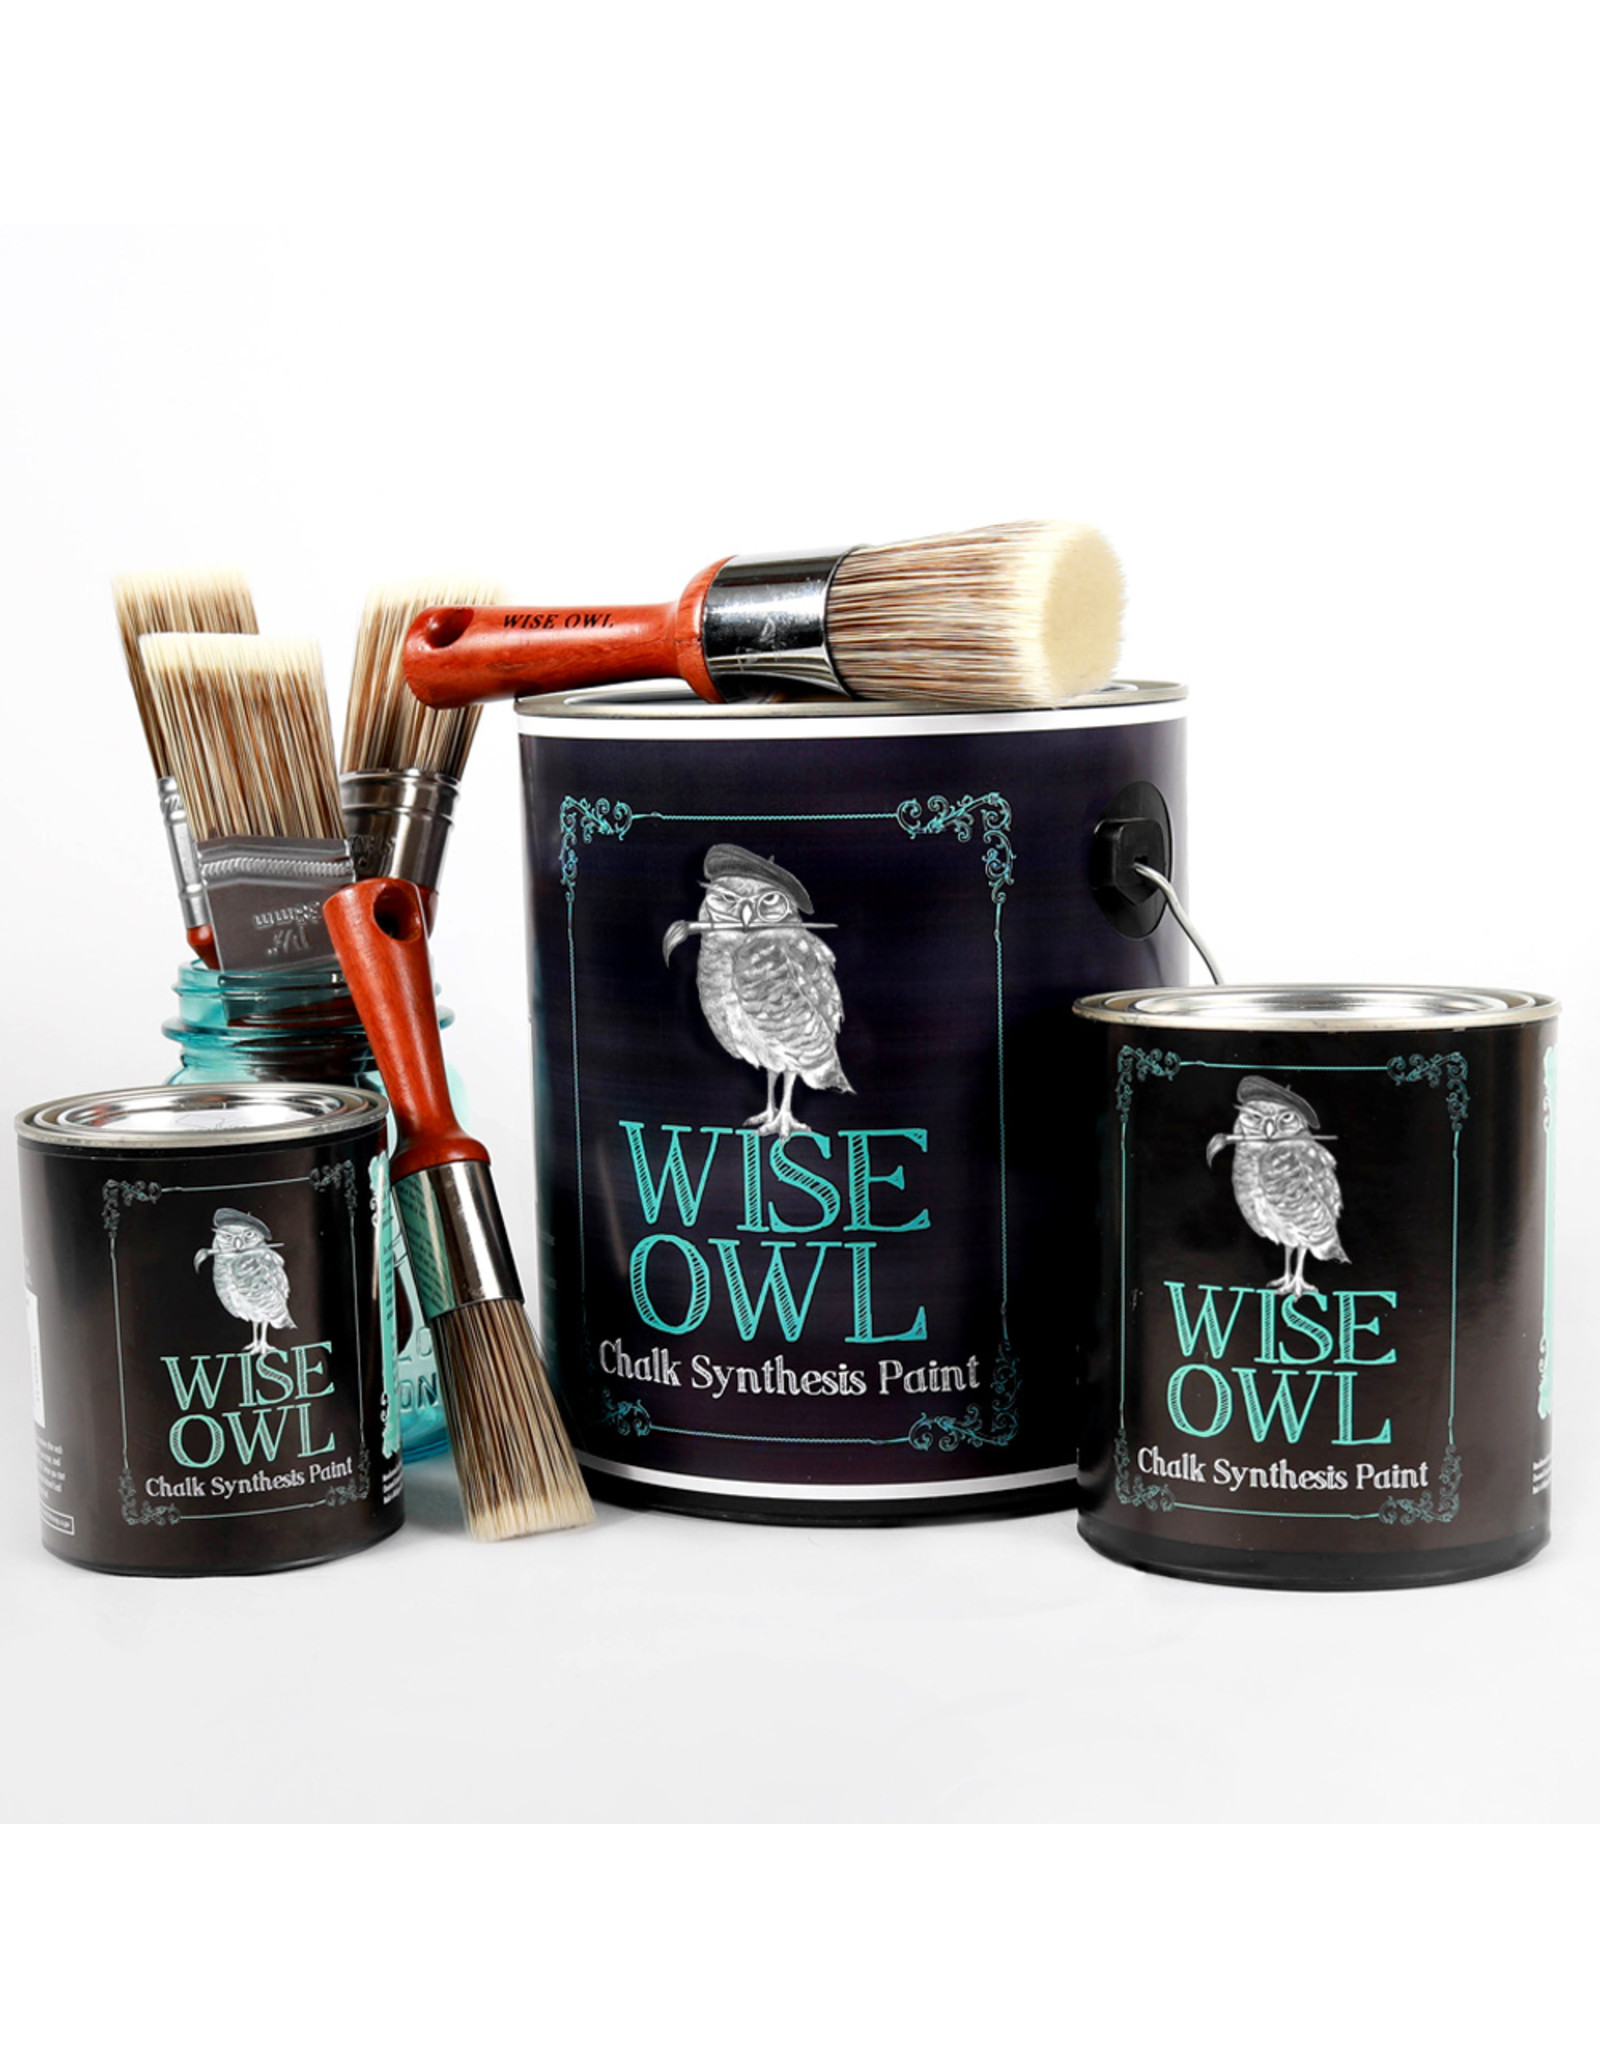 Wise Owl Paint Chalk Synthesis Paint-Foxtrot